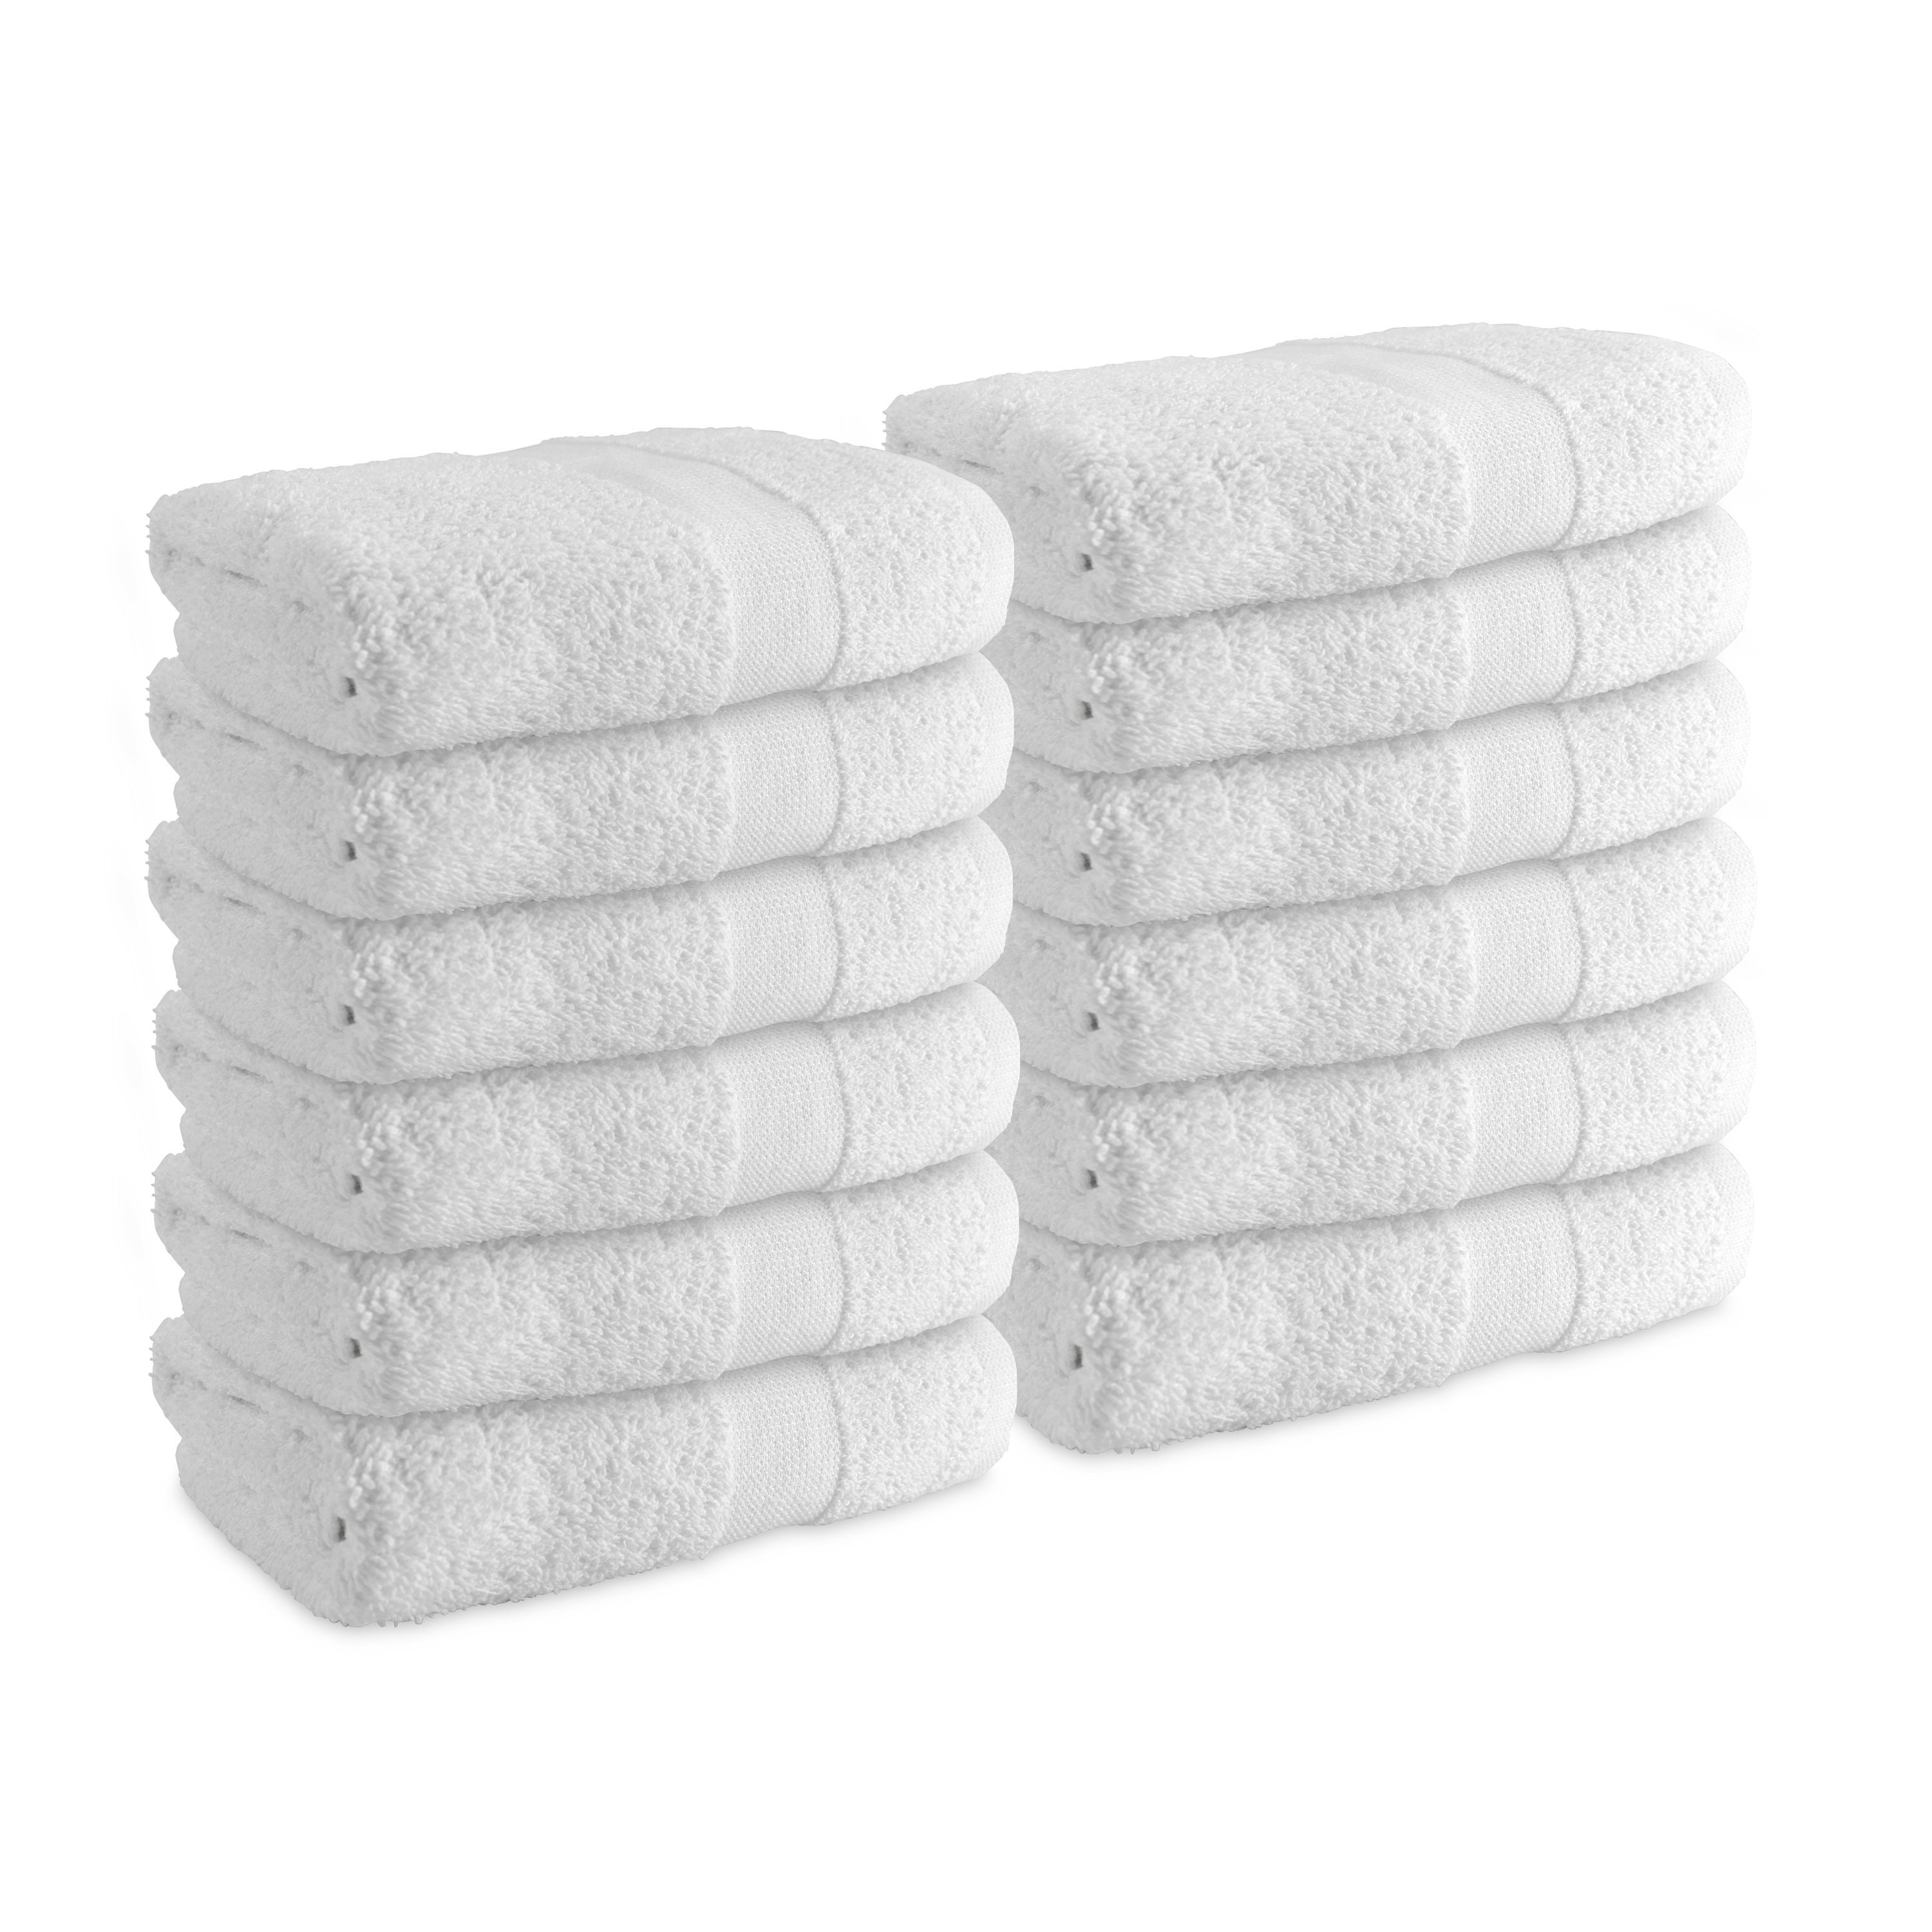 30x56 White Bath Sheets Combed Cotton